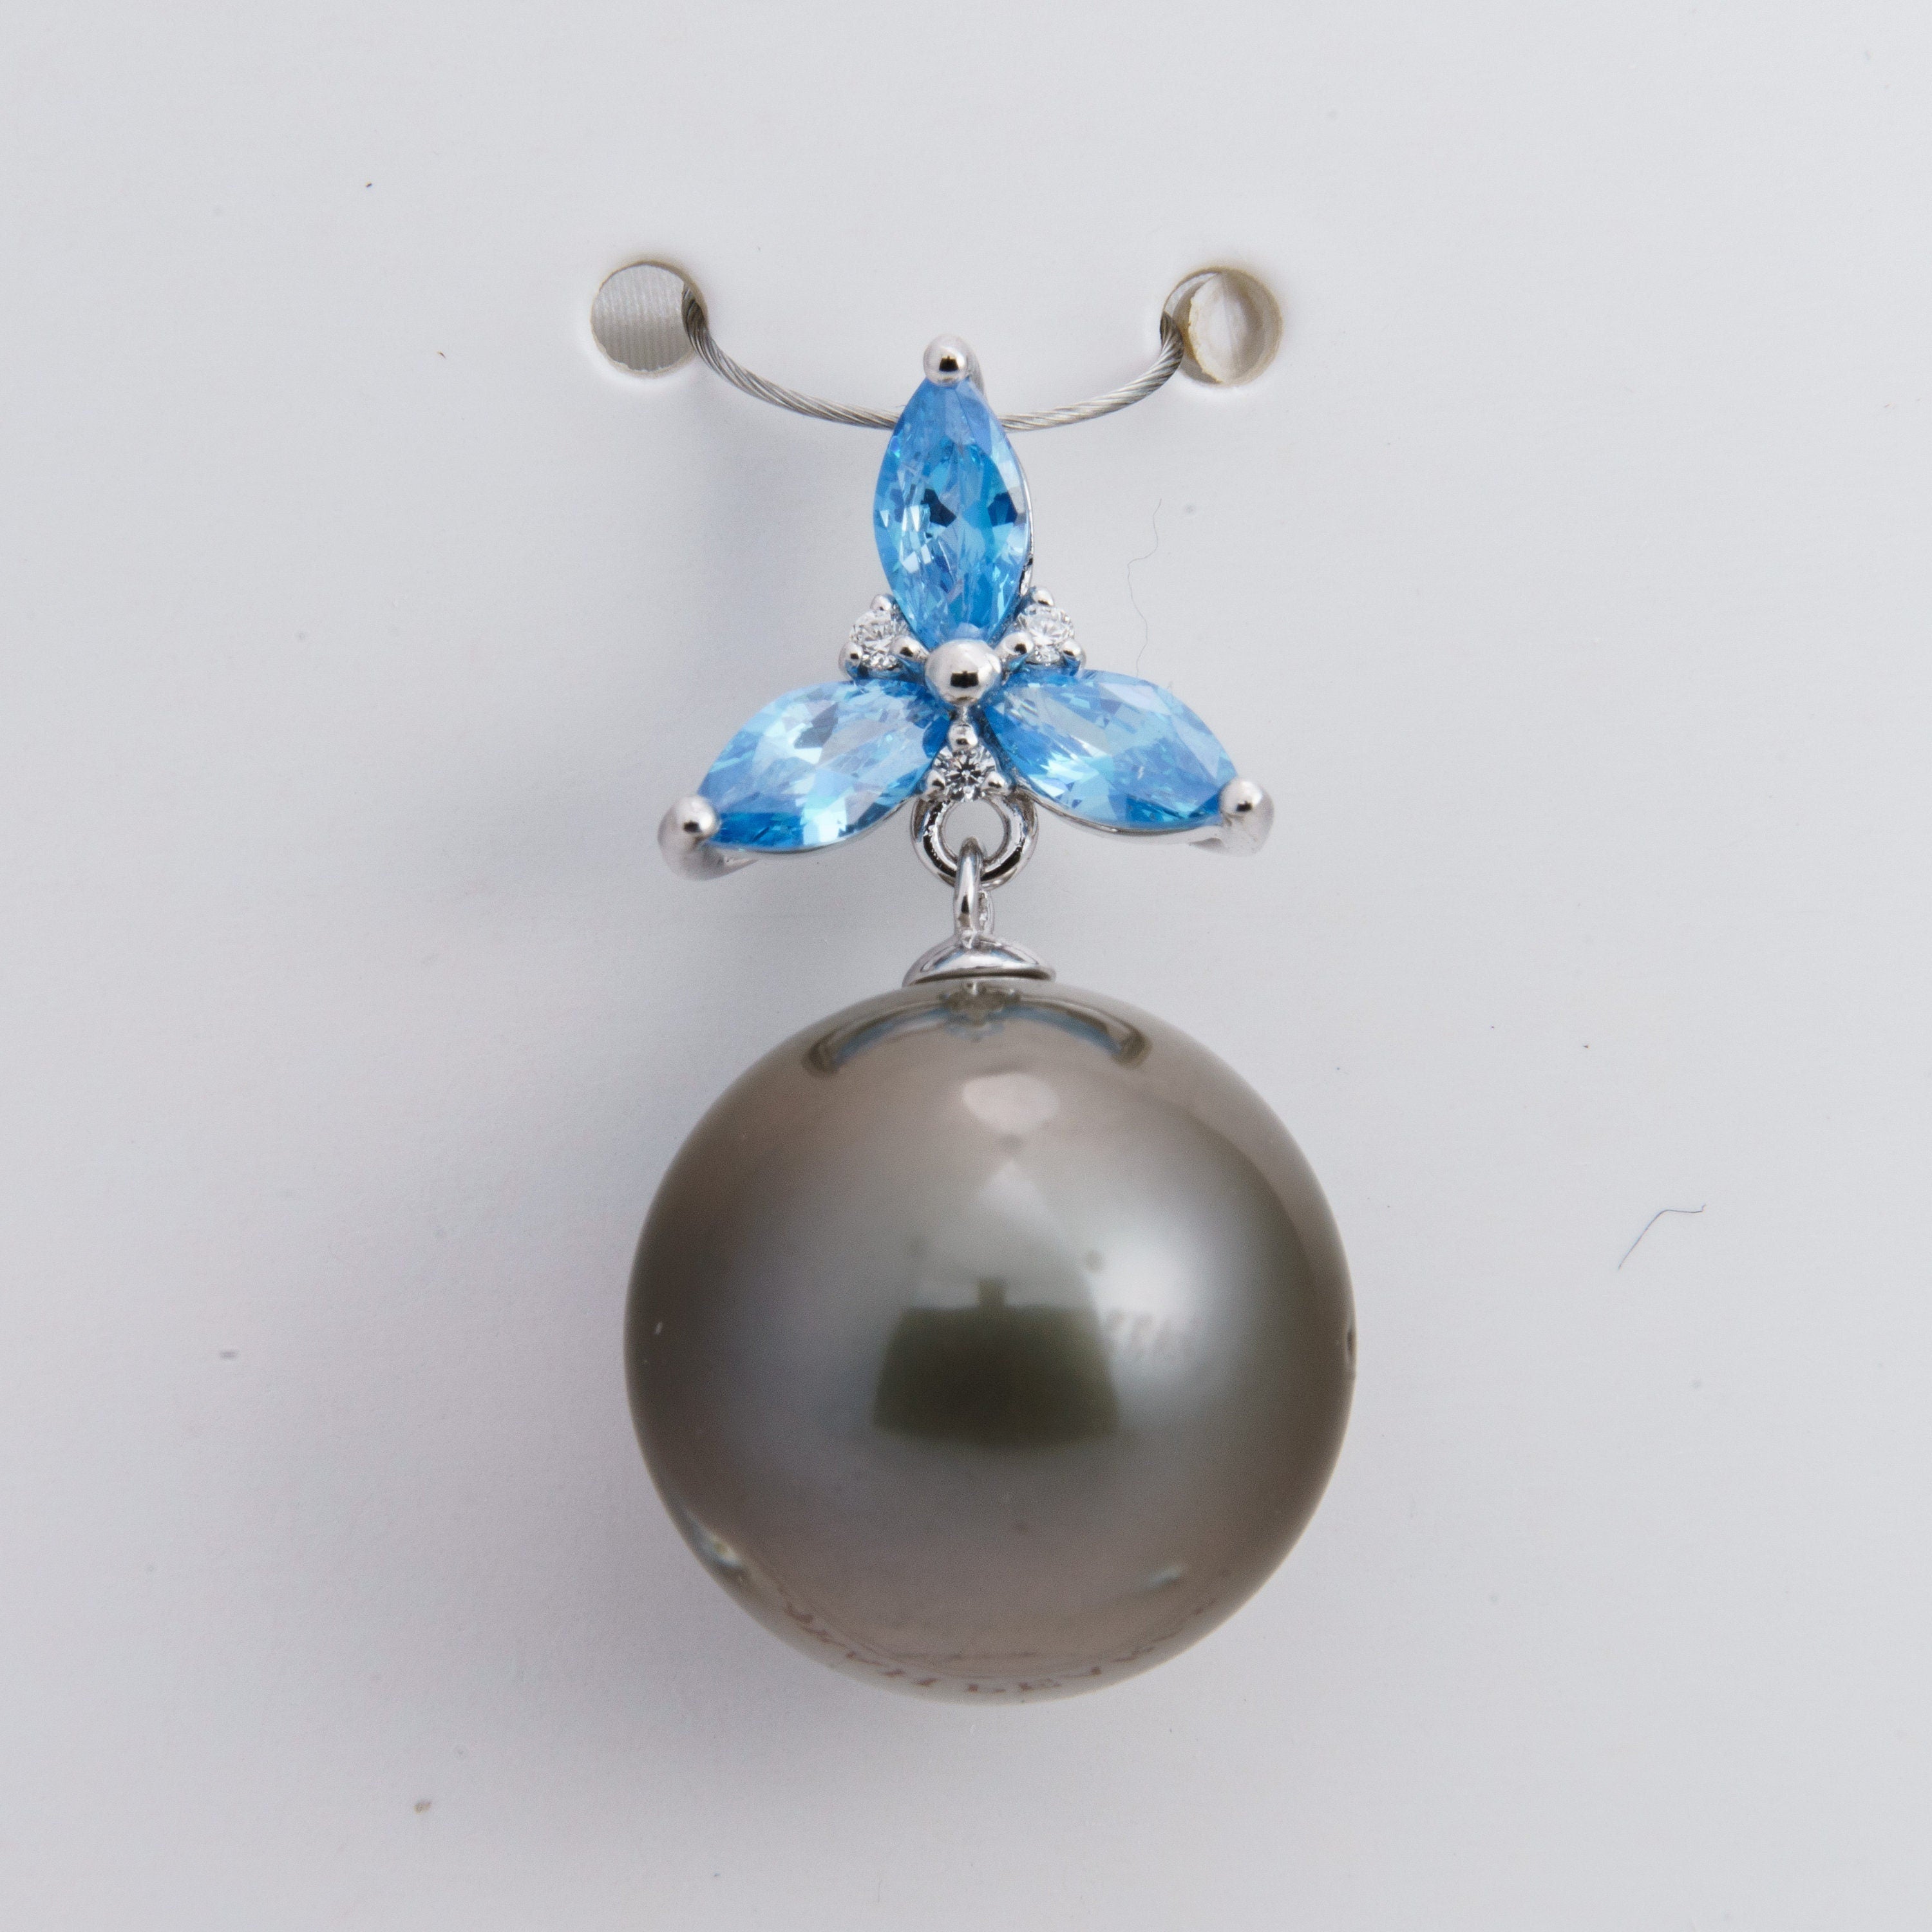 14mm tahitian pearl pendant, 925 sterling silver, rhodium finish, cubic zirconia